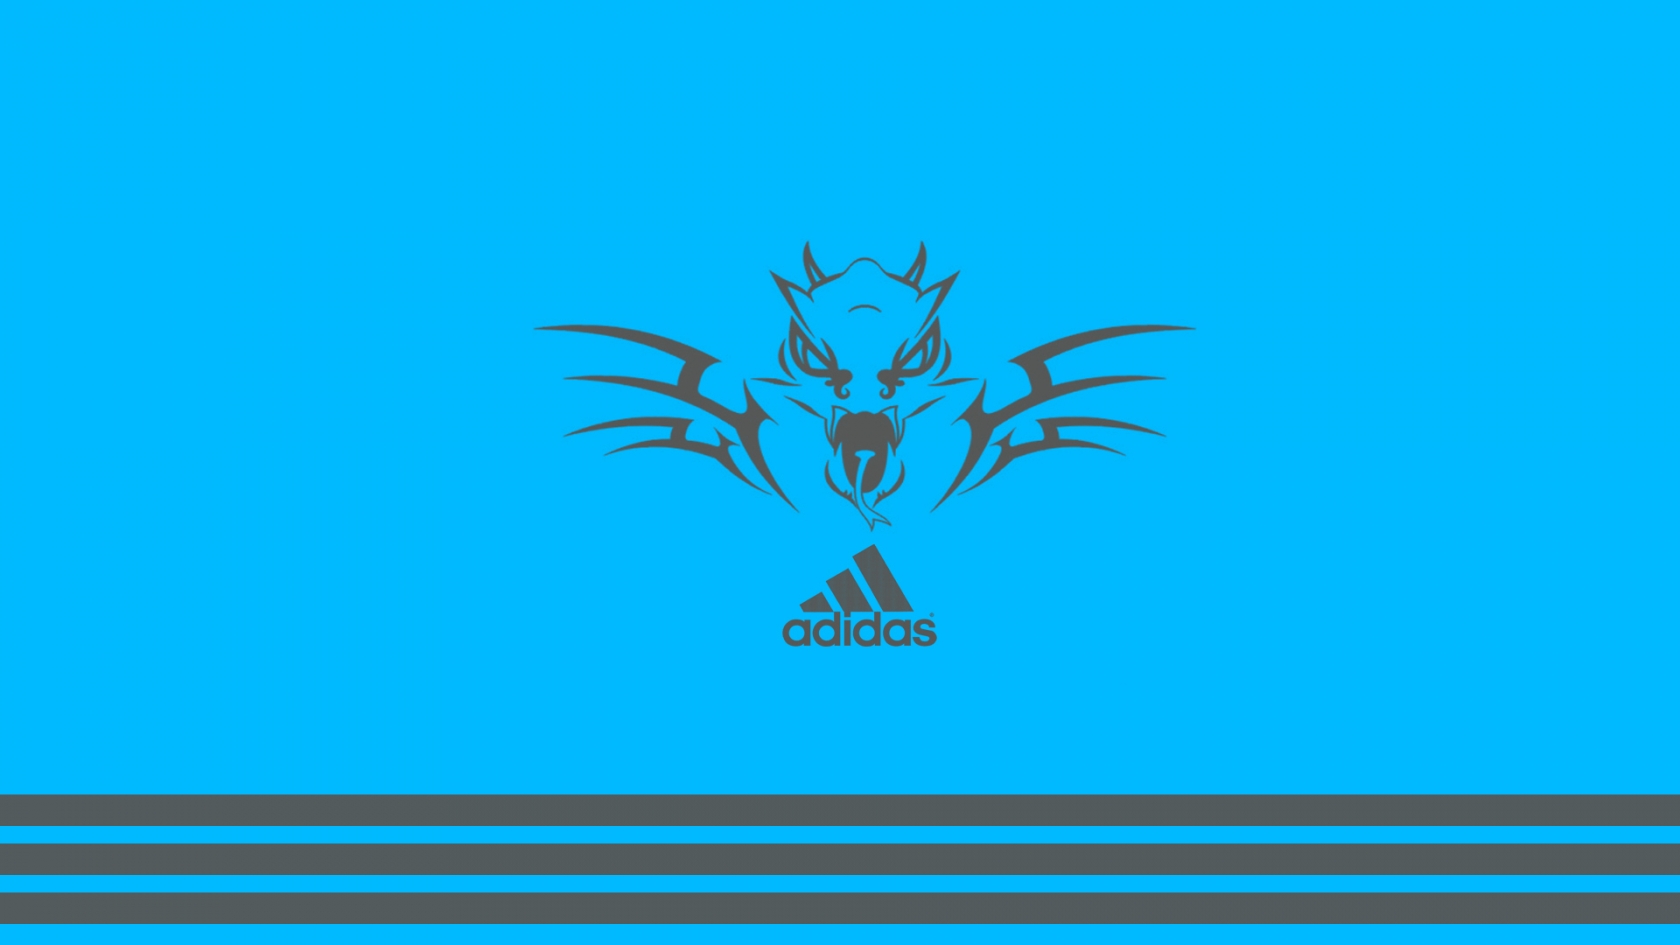 Adidas Fantasy Logo for 1680 x 945 HDTV resolution